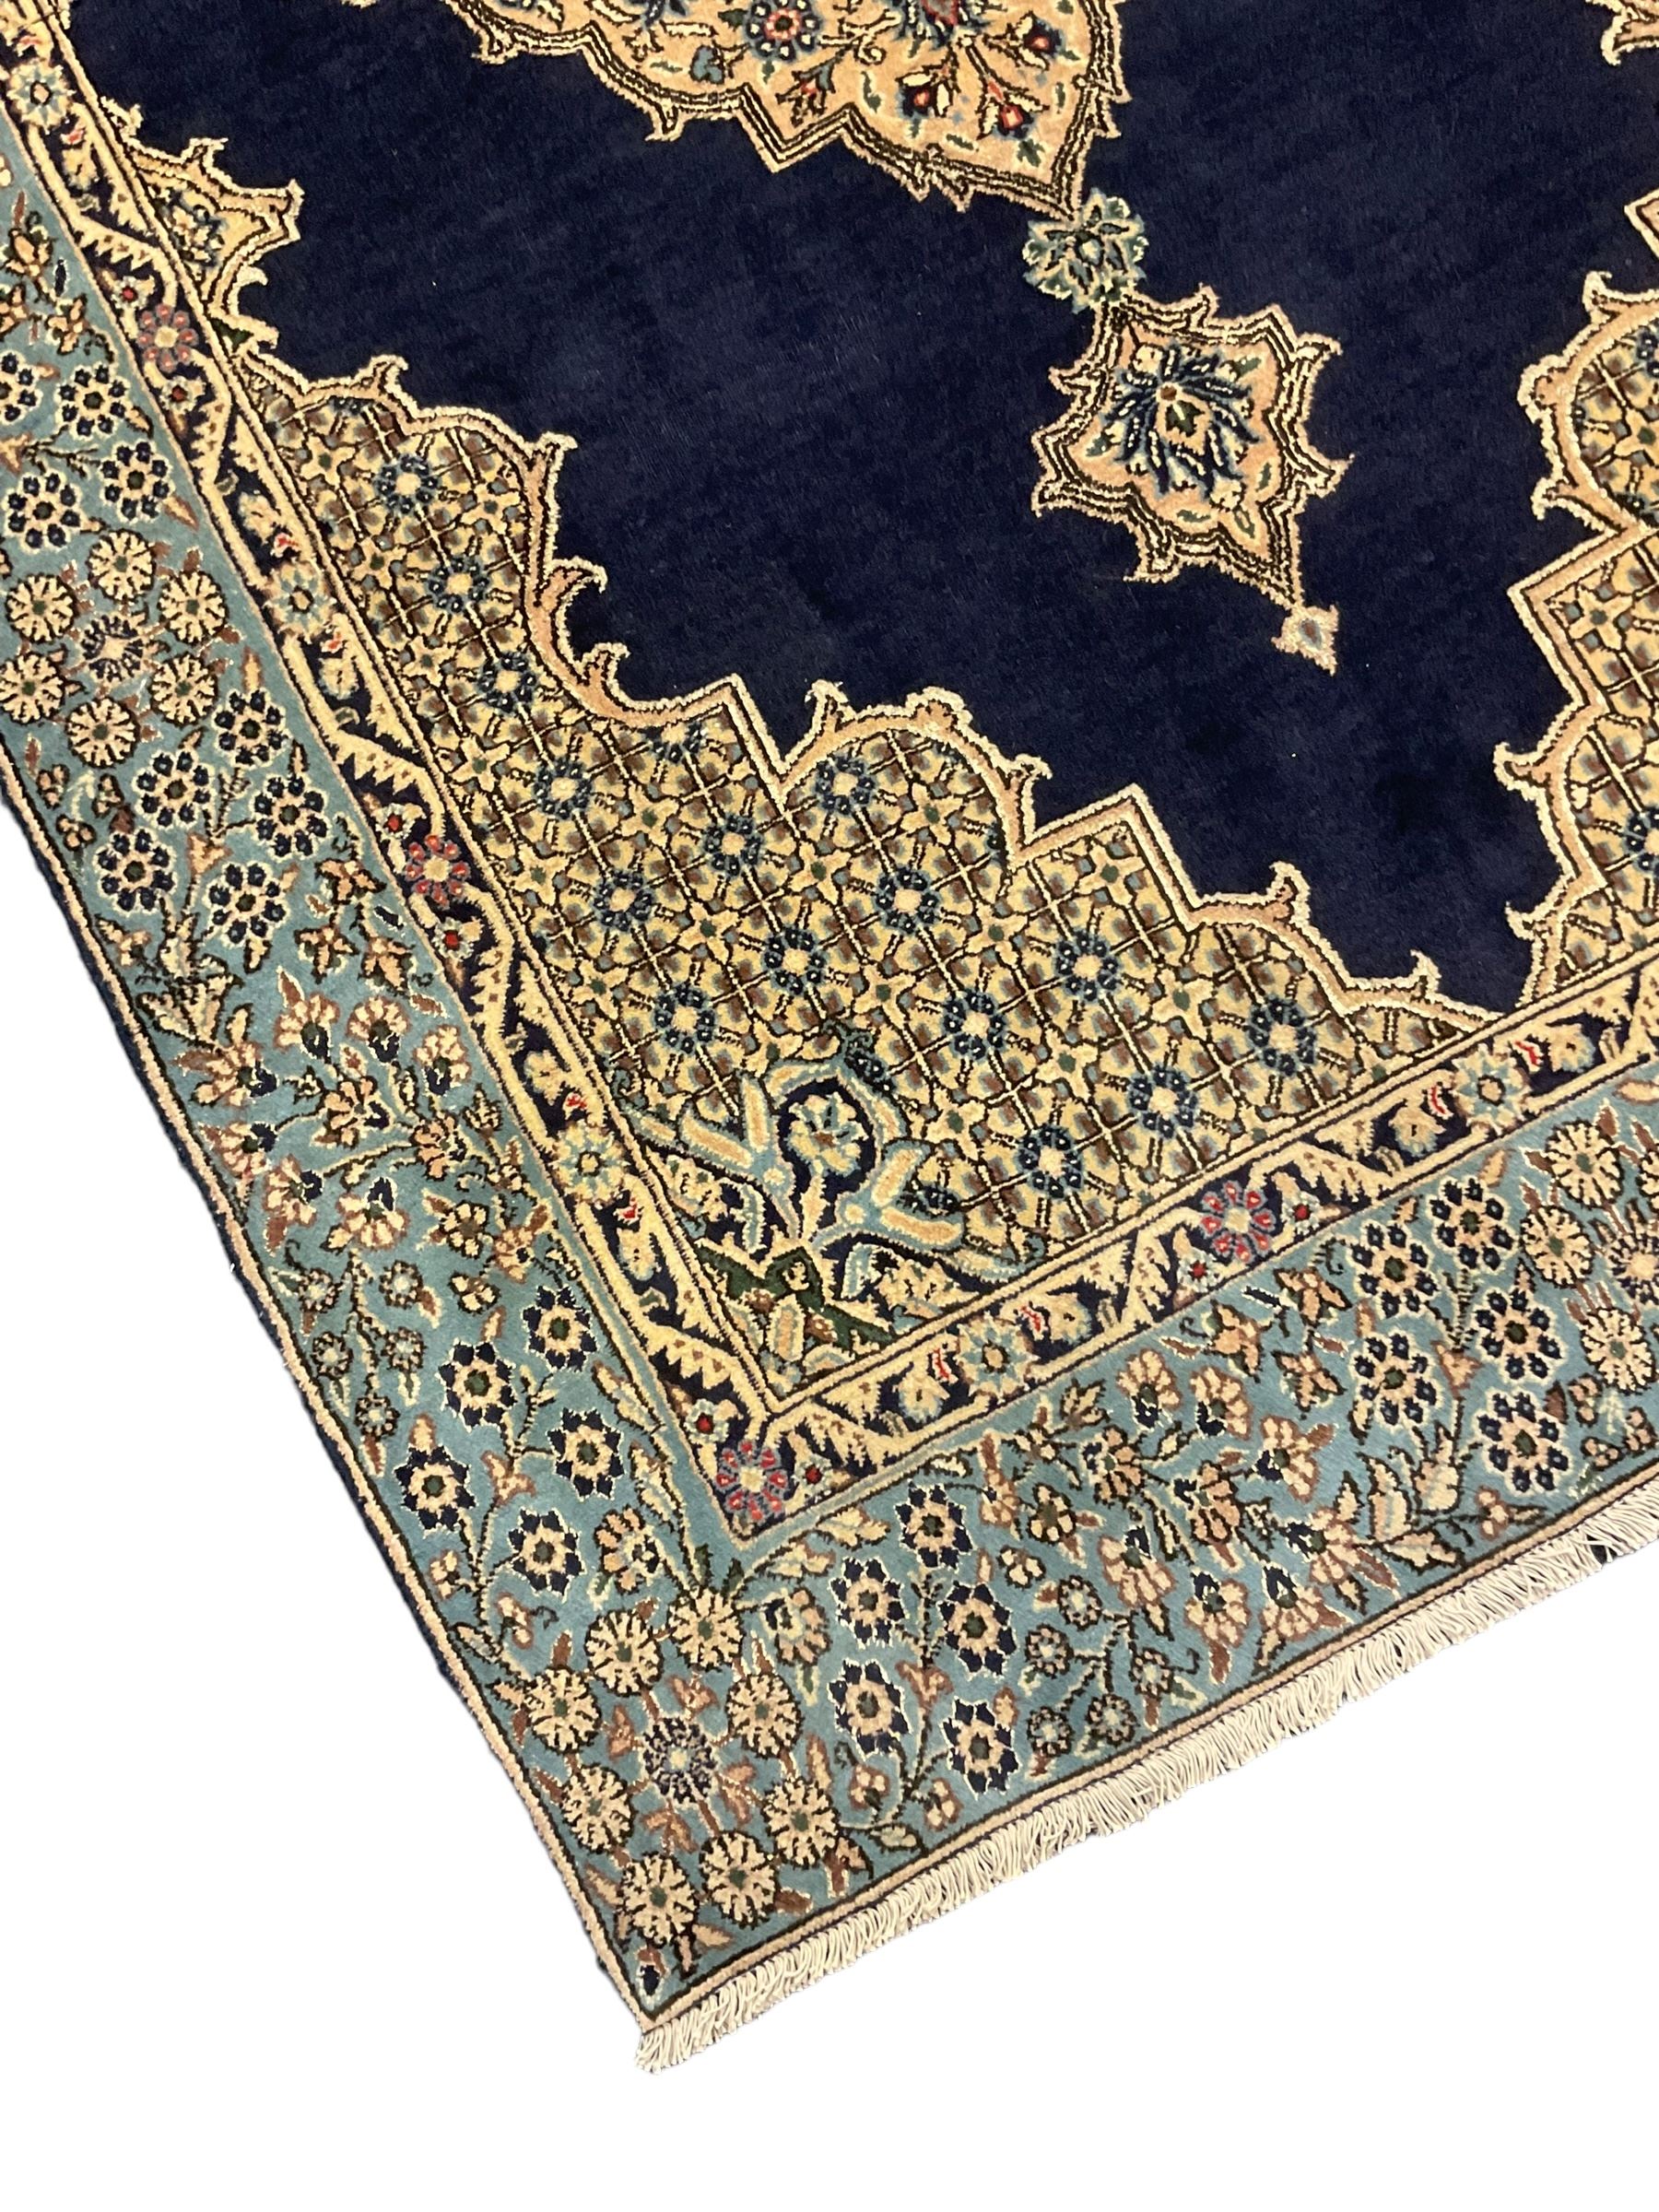 Central Persian Qum indigo ground rug with silk inlay - Image 2 of 5